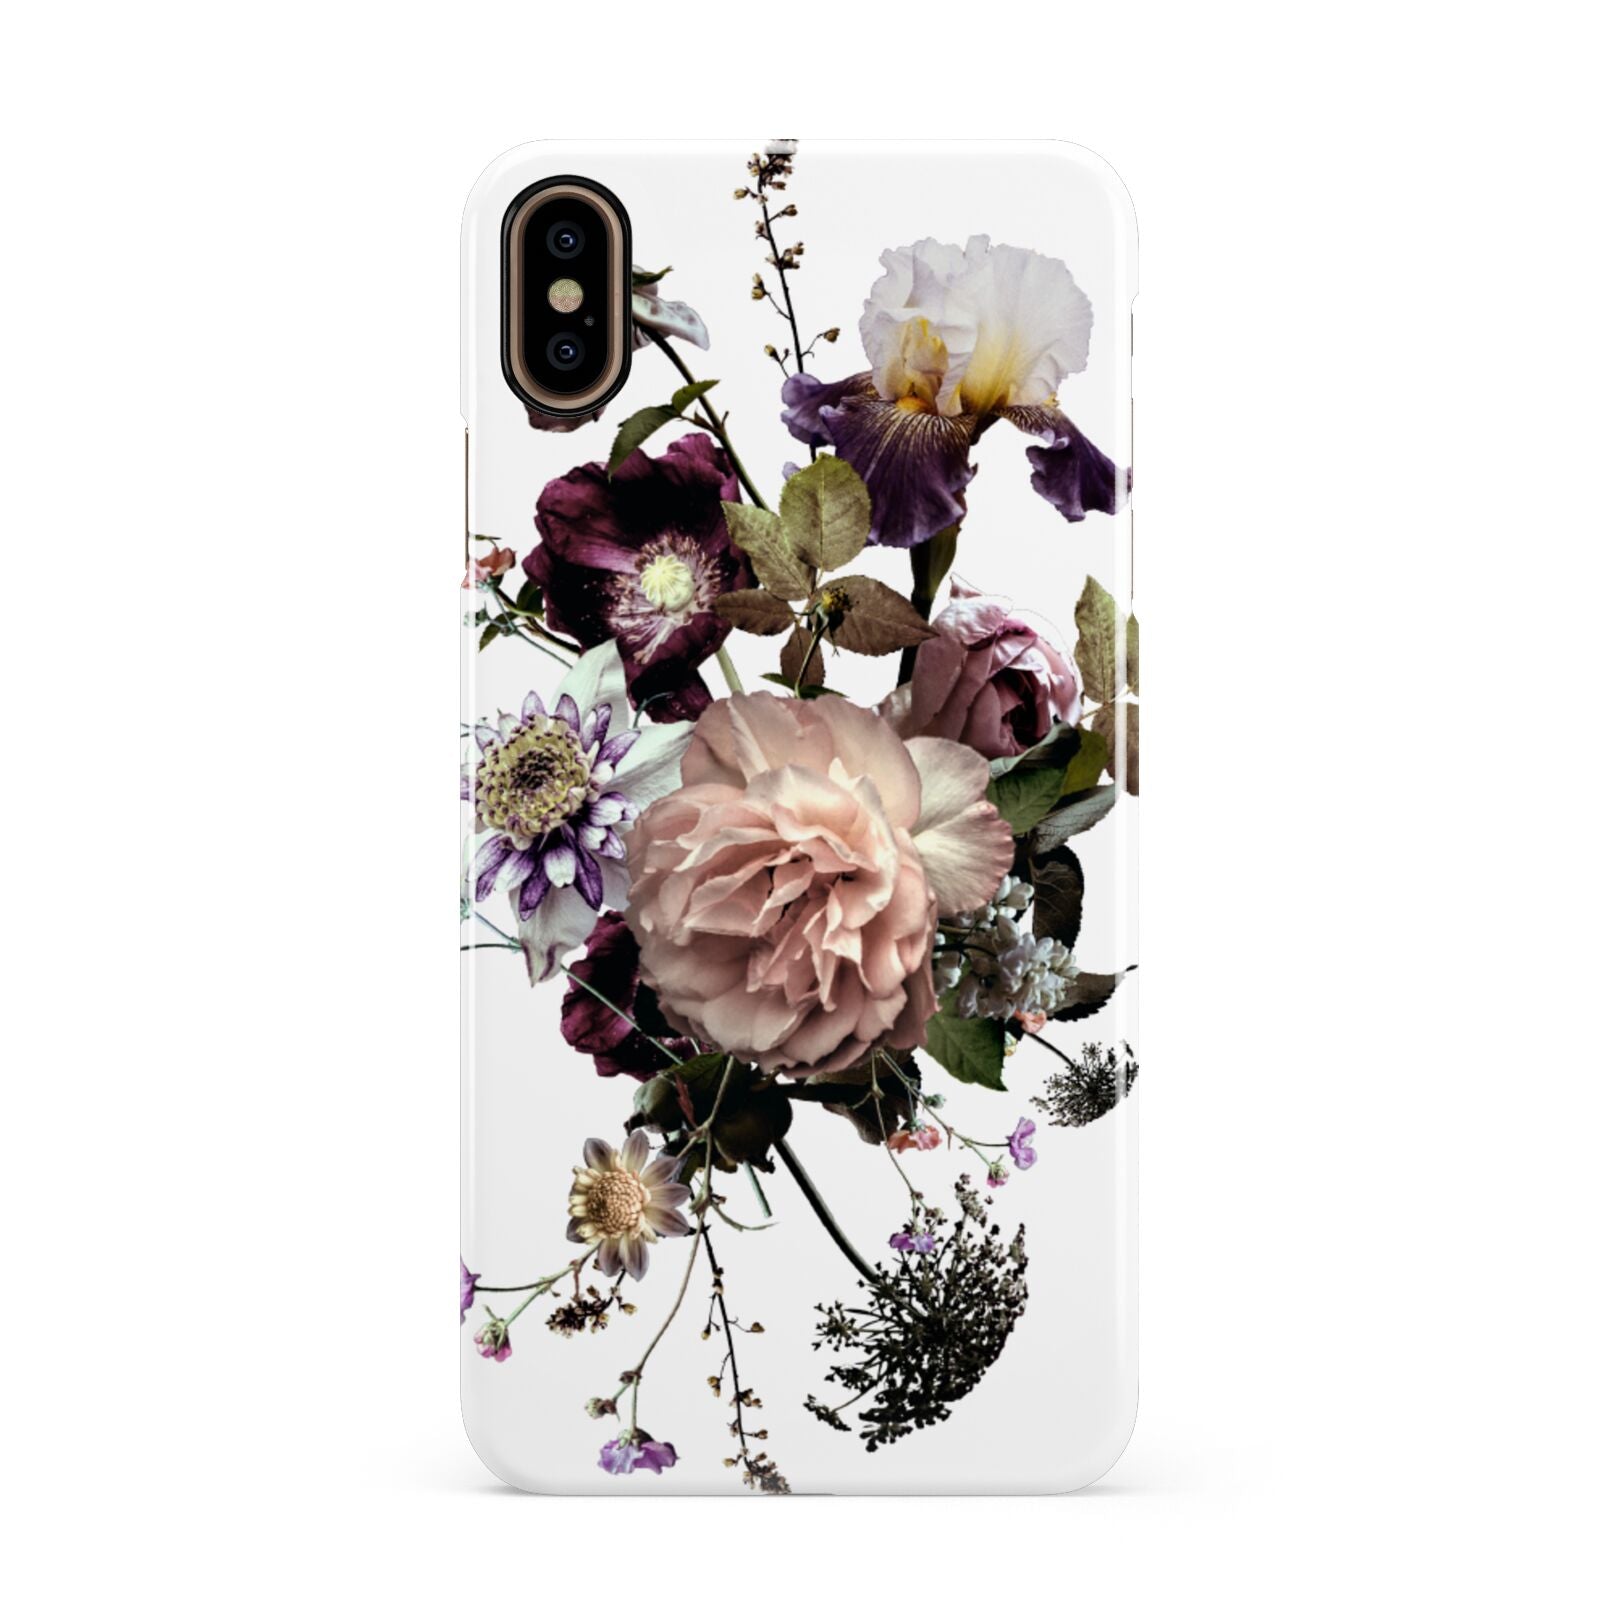 Vintage Flowers Apple iPhone Xs Max 3D Snap Case